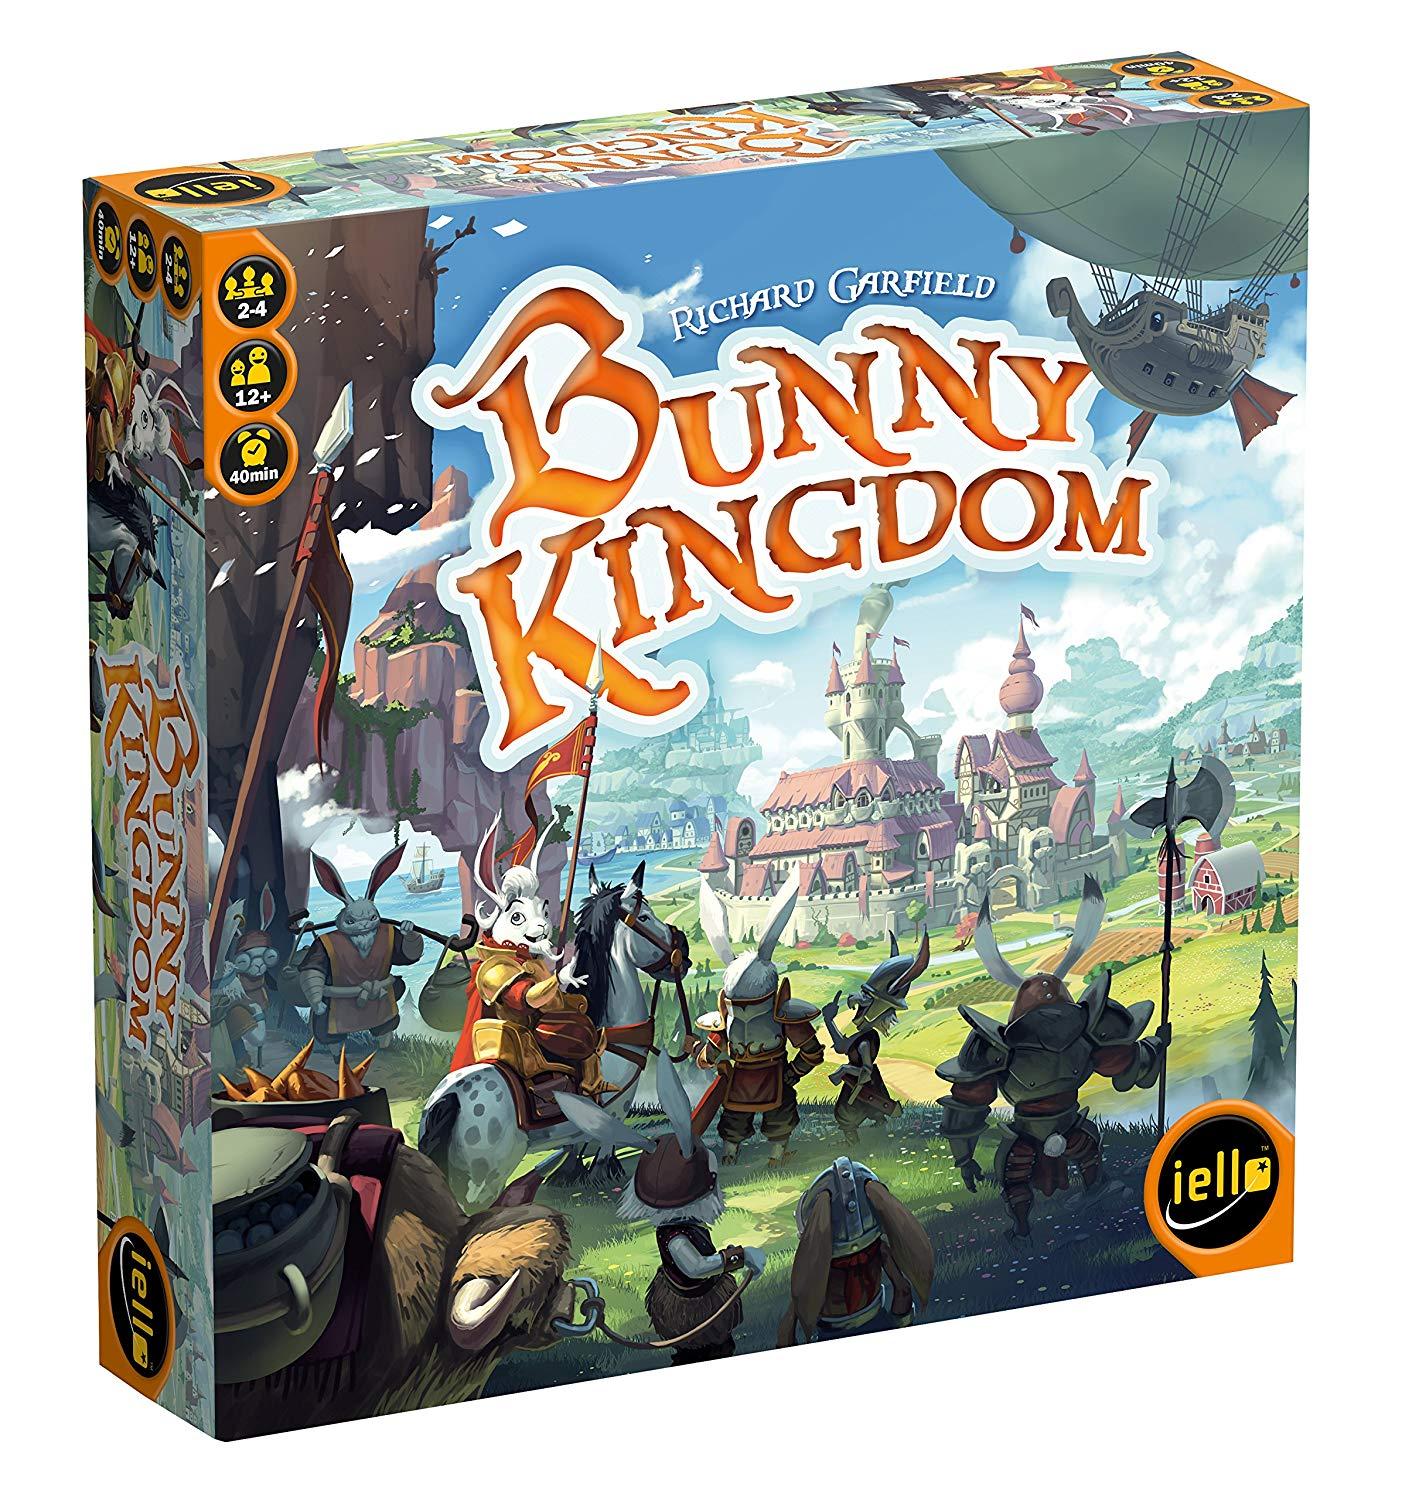 Bunny Kingdom Spielanleitung – PDF Download 0 (0)